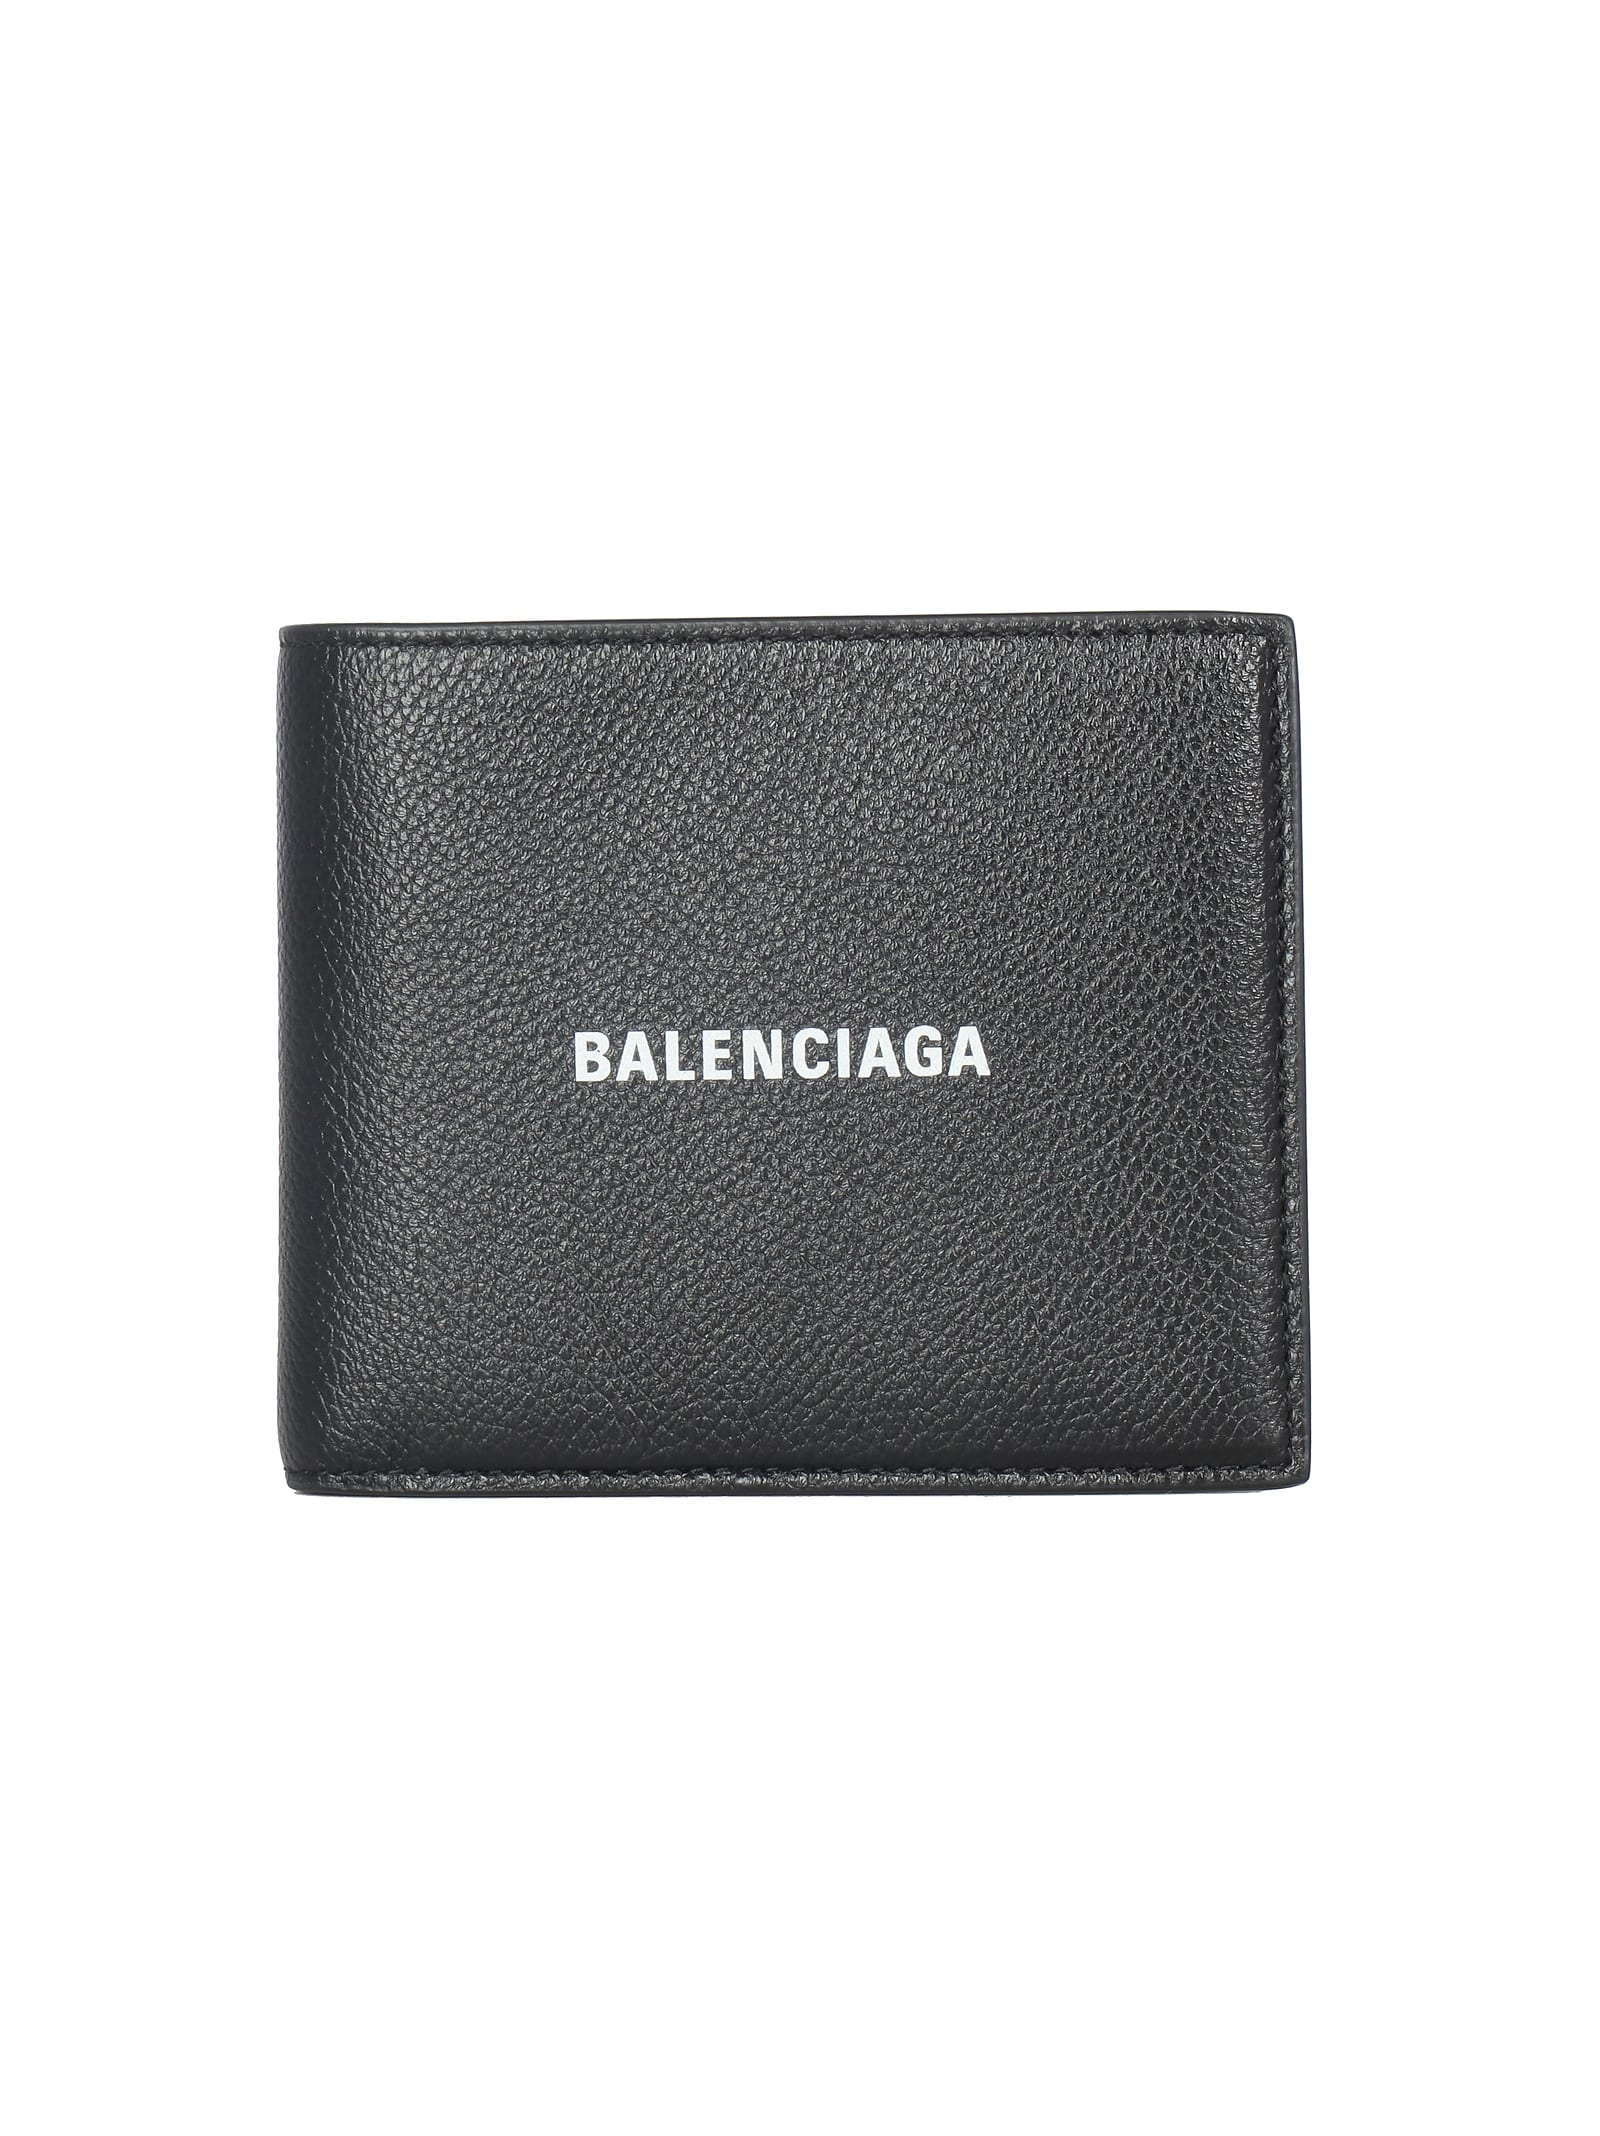 Balenciaga Cash Sq Fold Co Wal In Black White